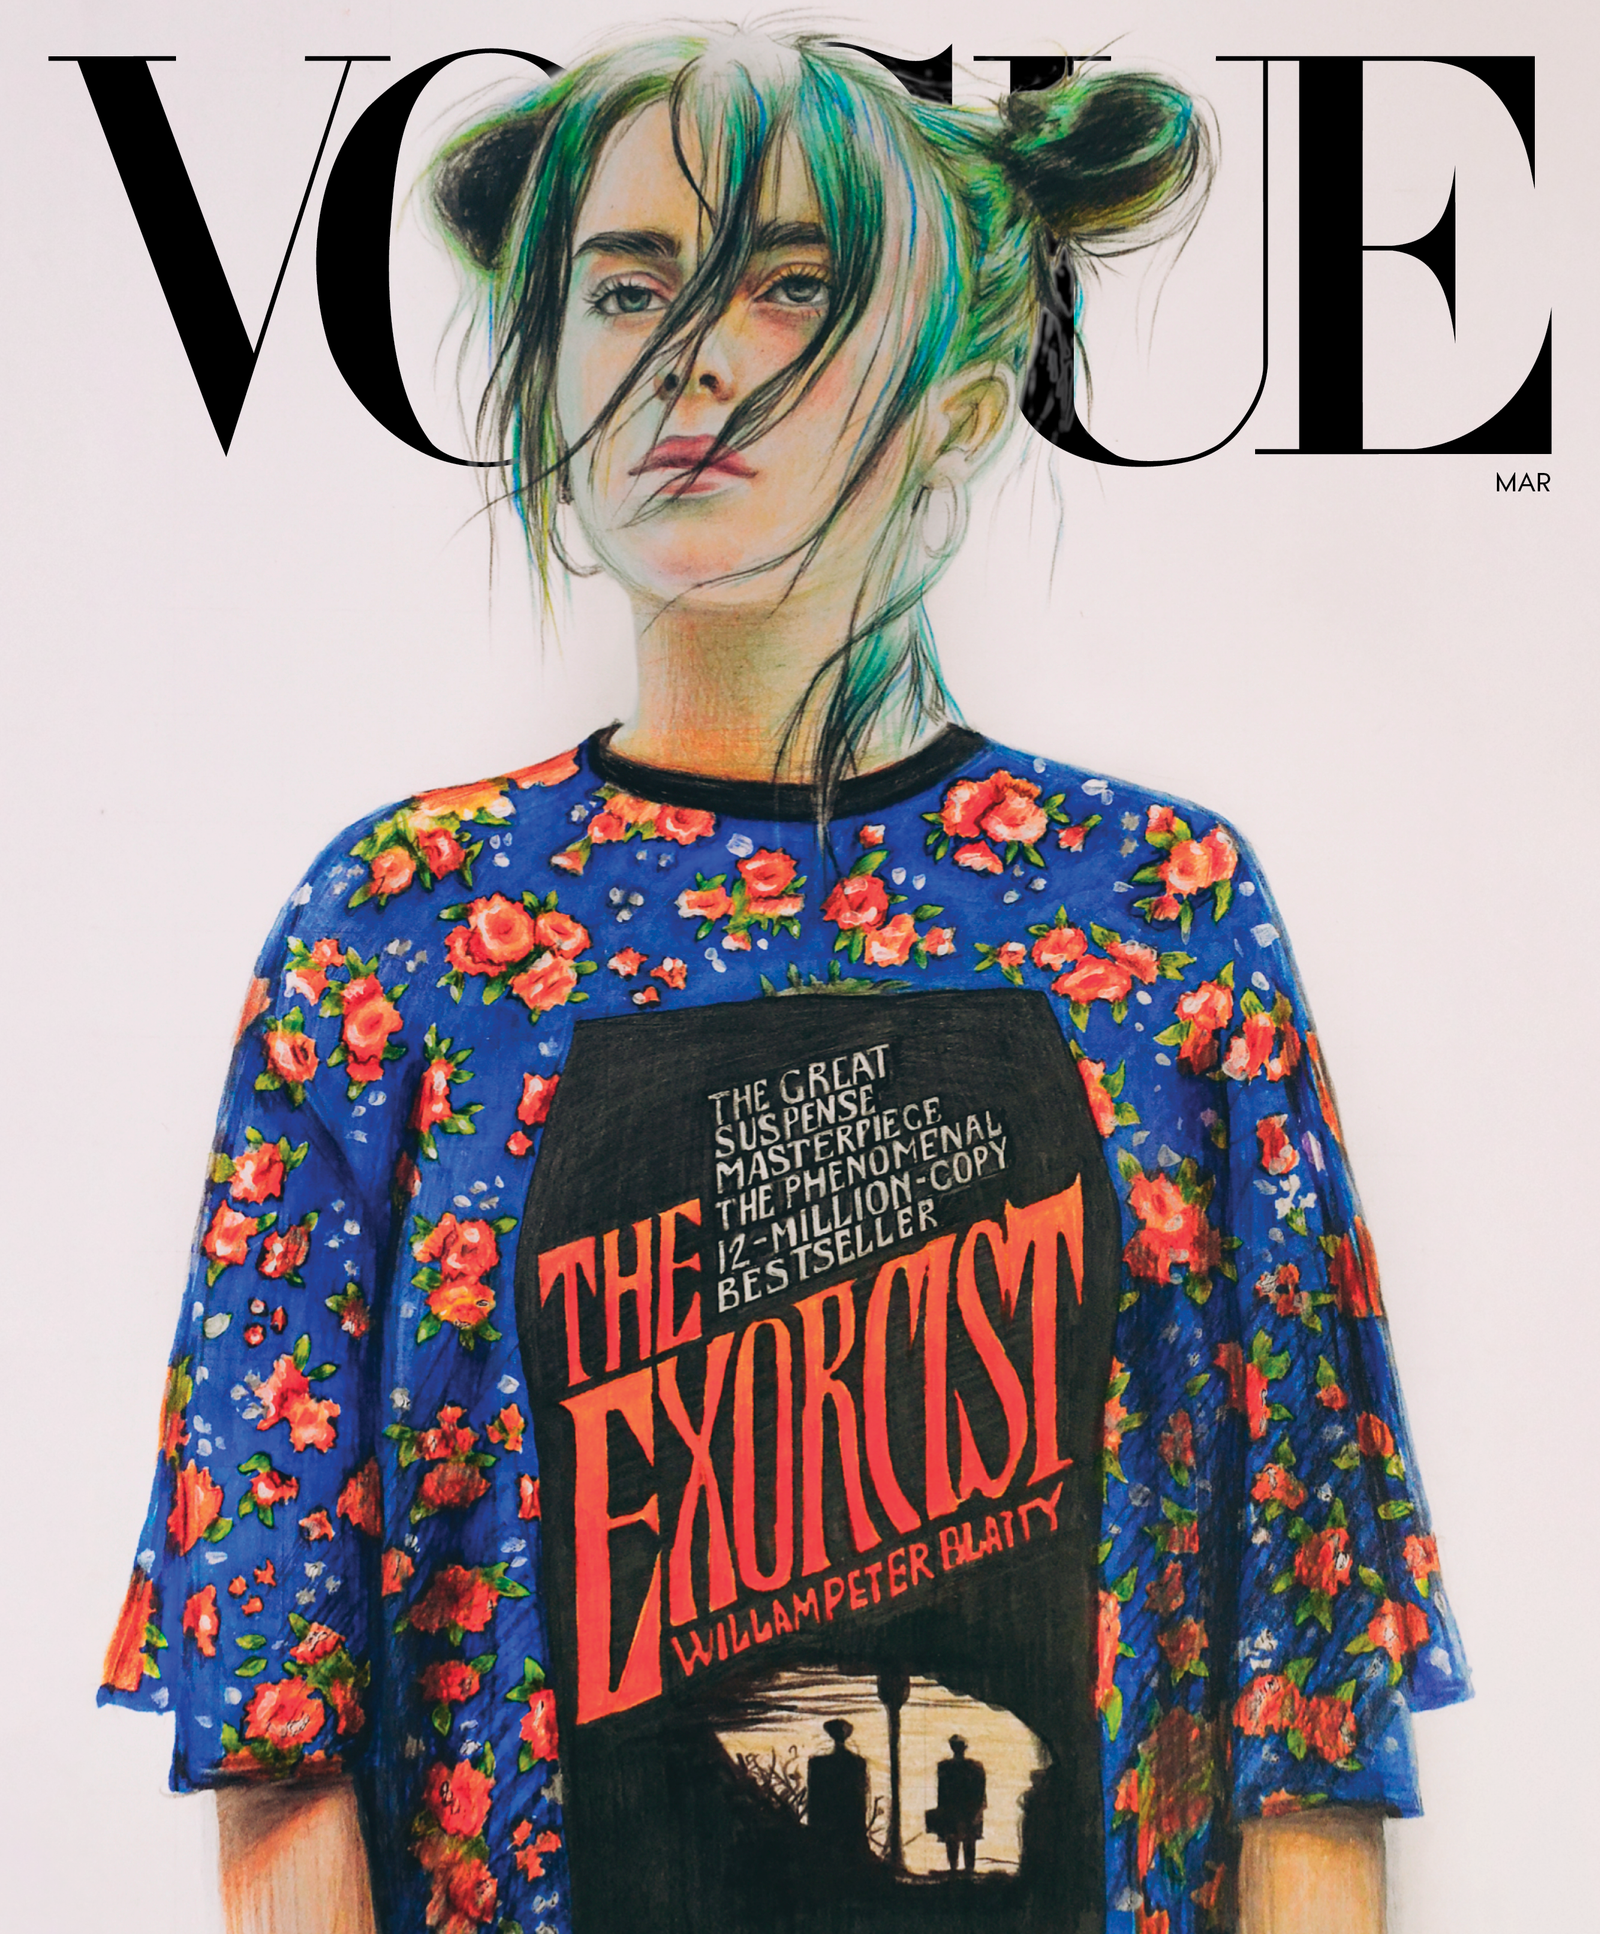 Billie Eilish's Vogue Cover: How the Singer Is Reinventing Pop Stardom